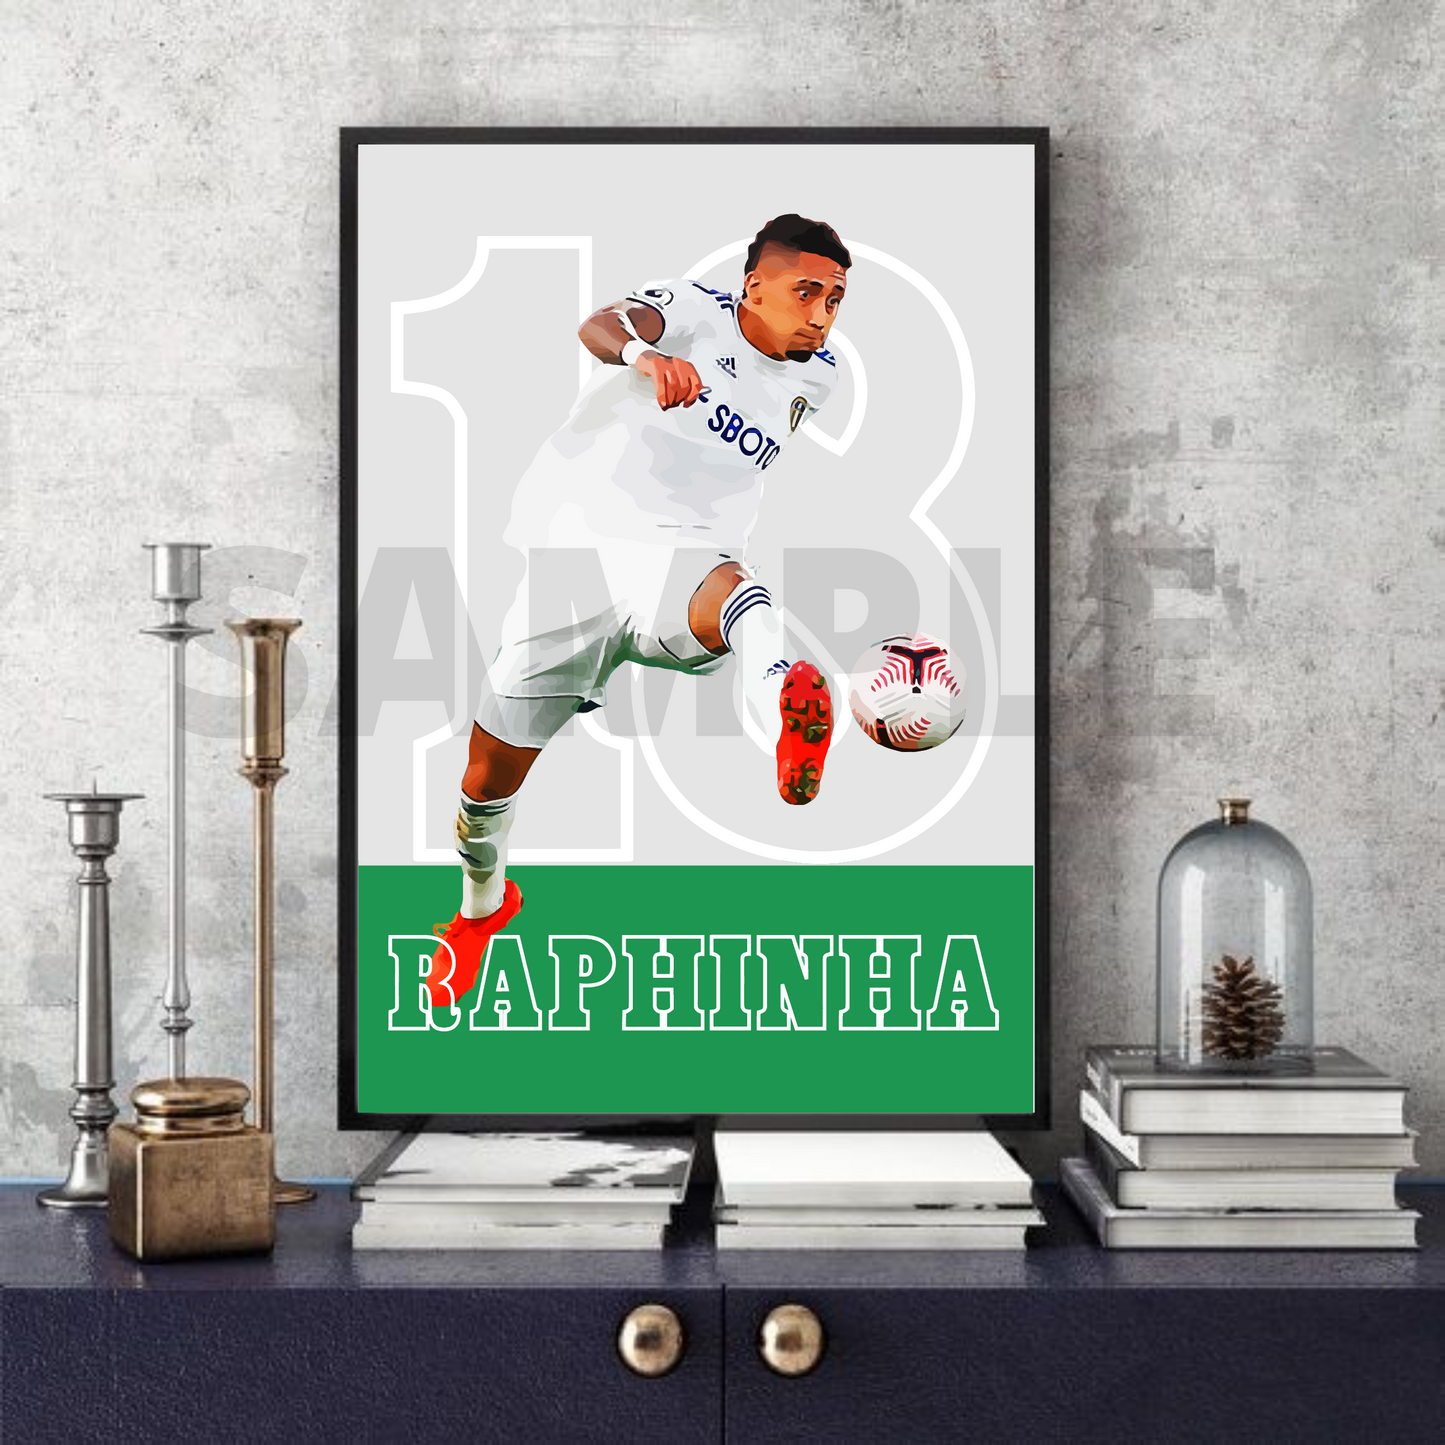 Raphinha - Leeds United Football Memorabilia/Collectible/Print signed